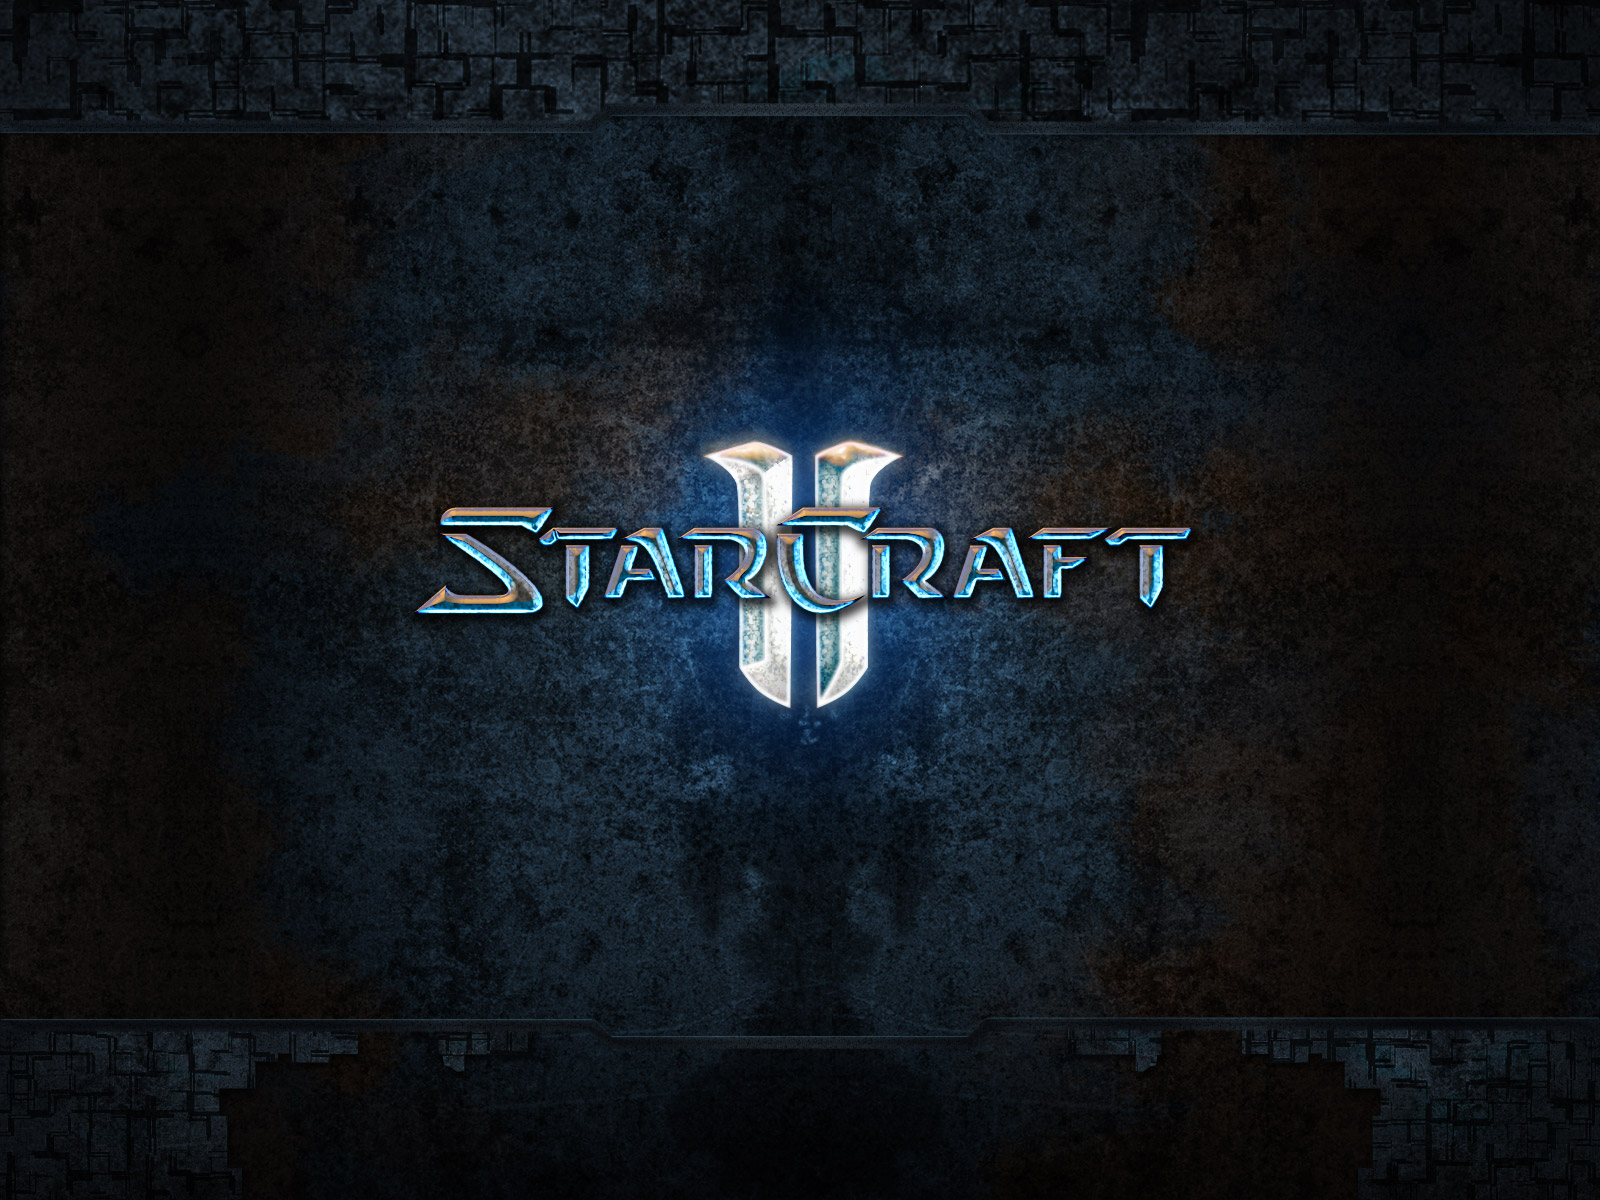 Starcraft 2 wallpaper design Tutzor